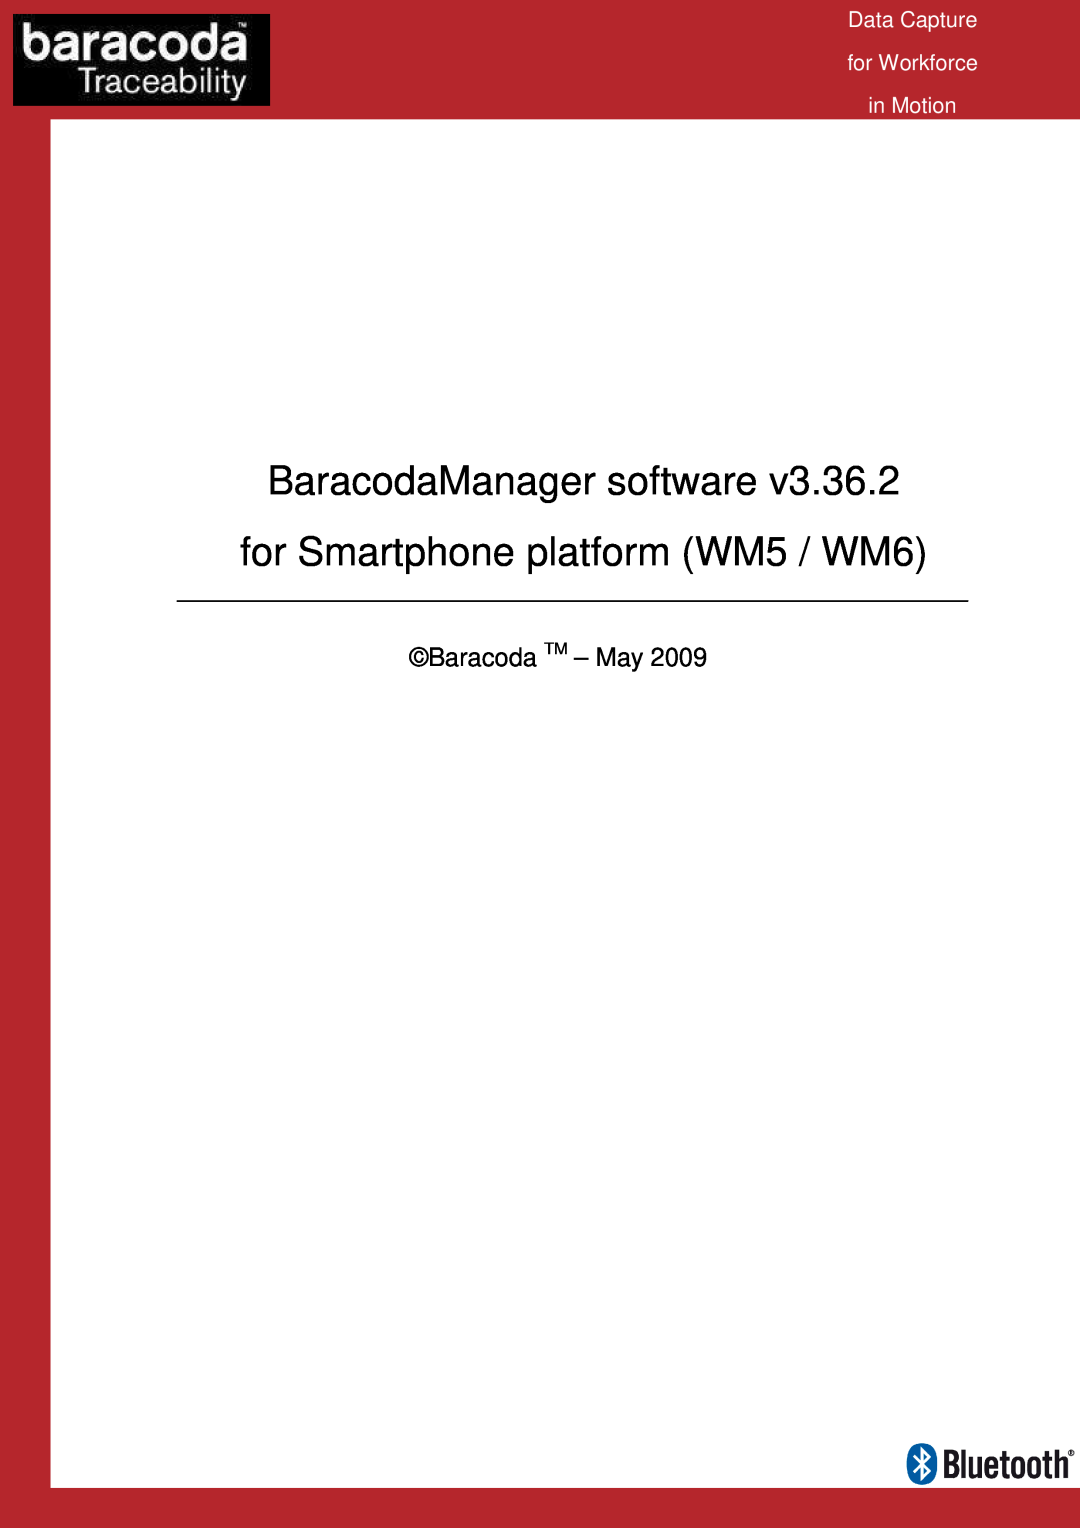 Baracoda V3.36.2 manual Data Capture for Workforce in Motion, BaracodaManager software for Smartphone platform WM5 / WM6 